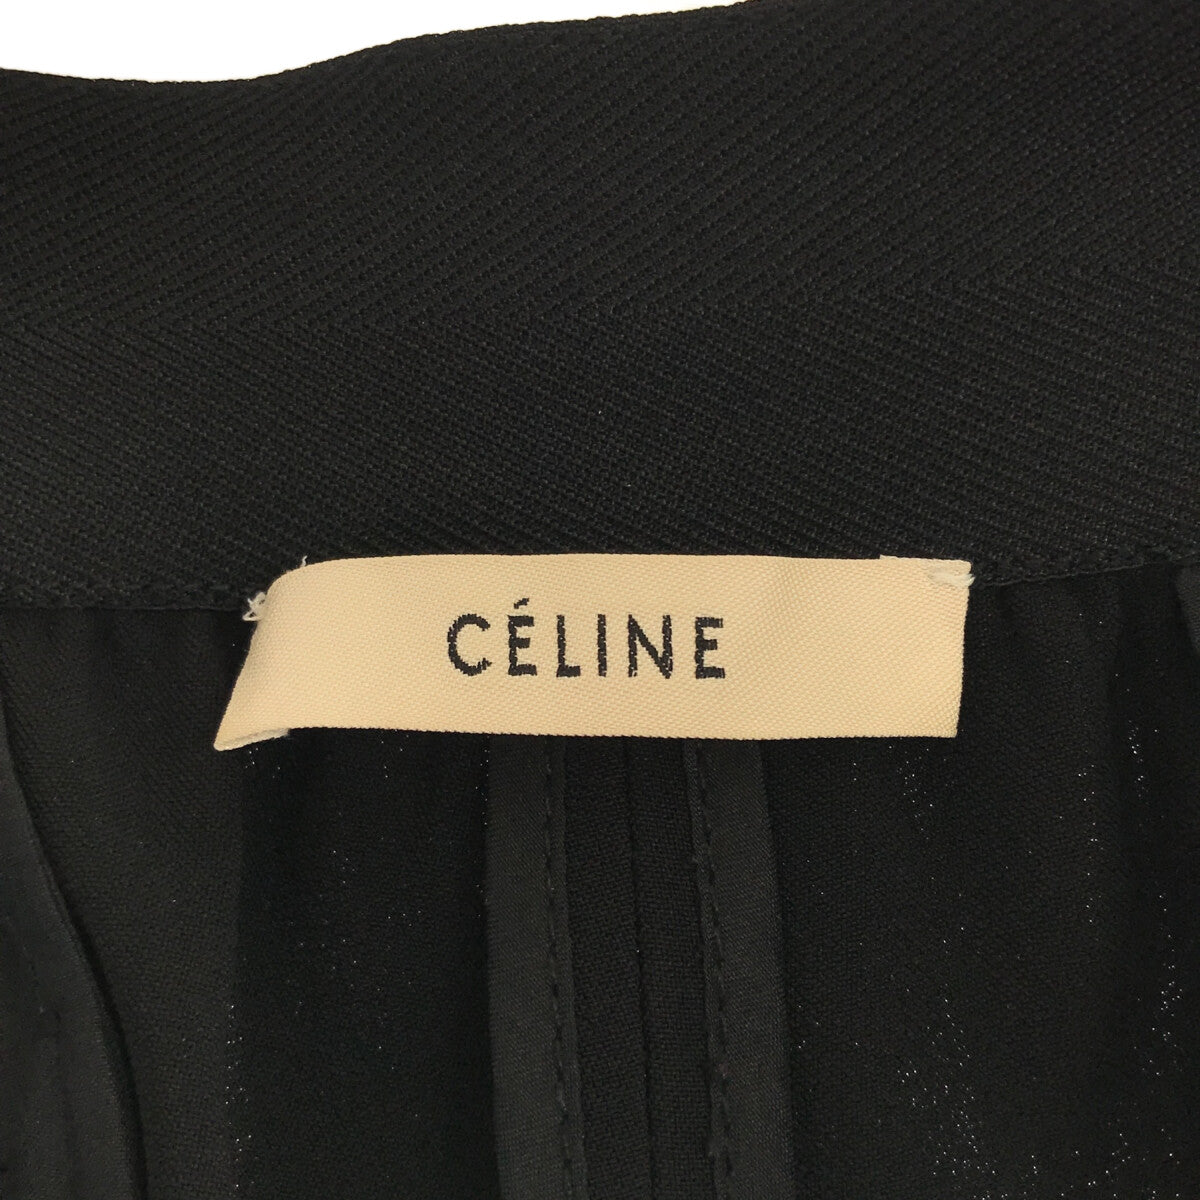 CELINE / セリーヌ | サイド切替 イージーパンツ | 36 | ブラック | レディース